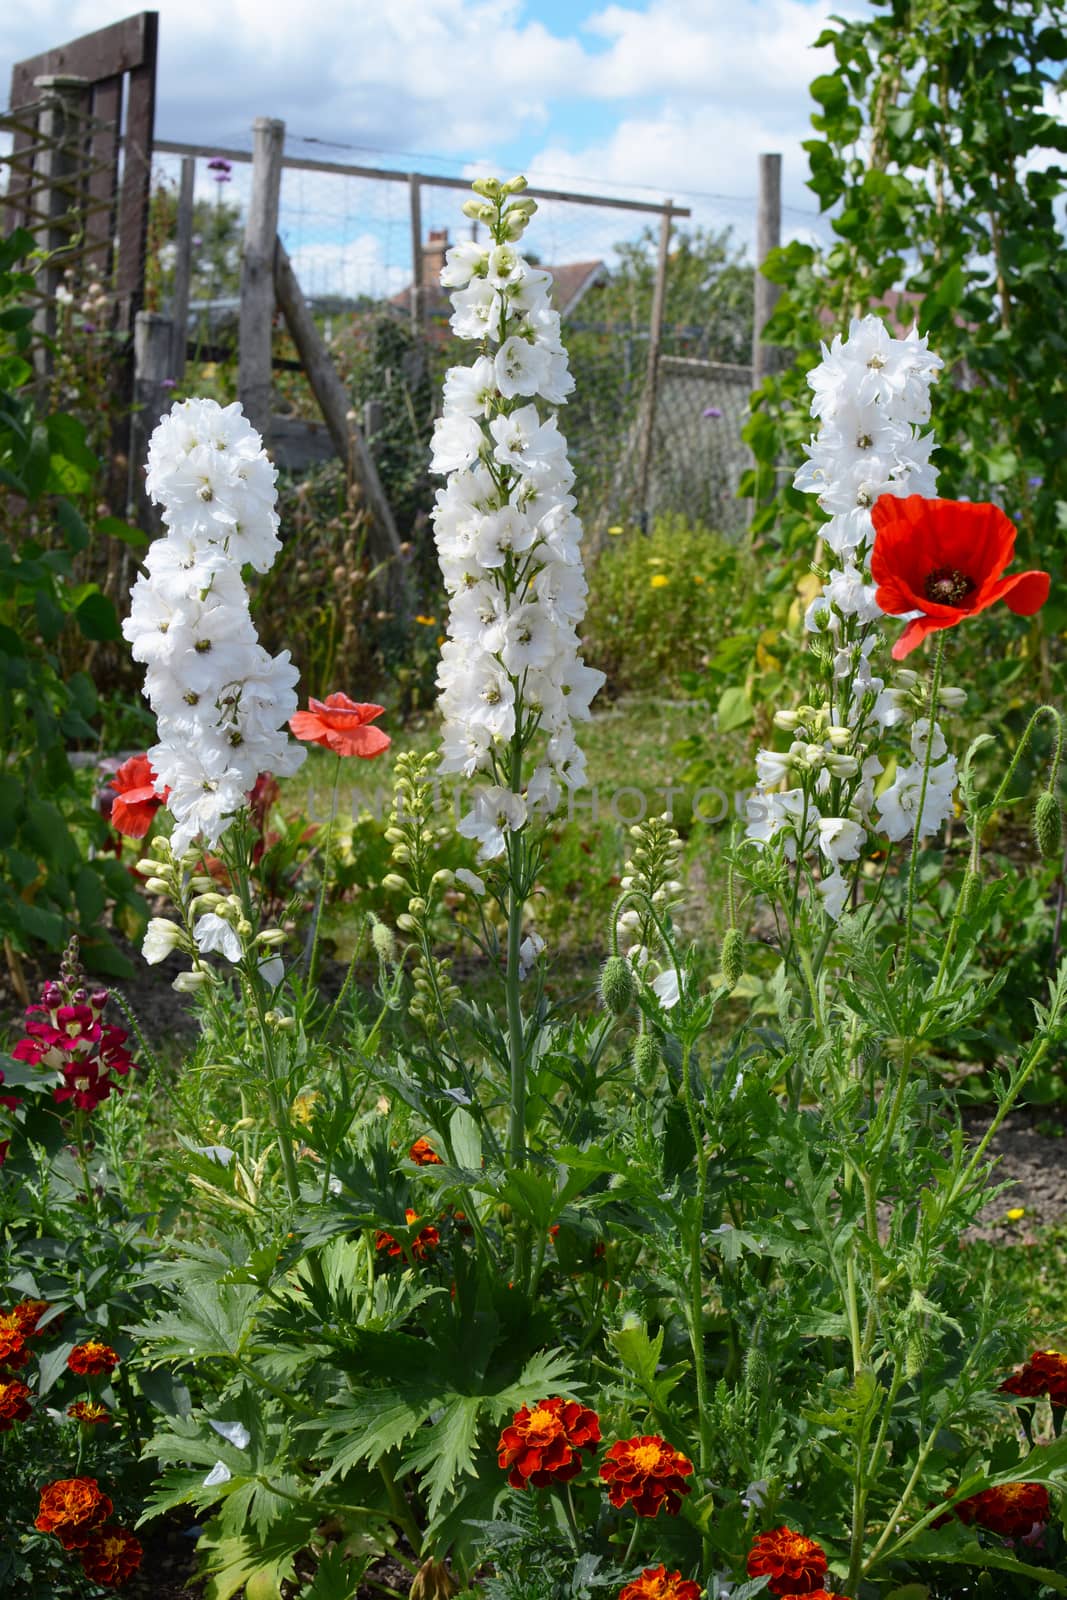 White delphinium flowers grow alongside poppies and marigolds in a summertime flower garden